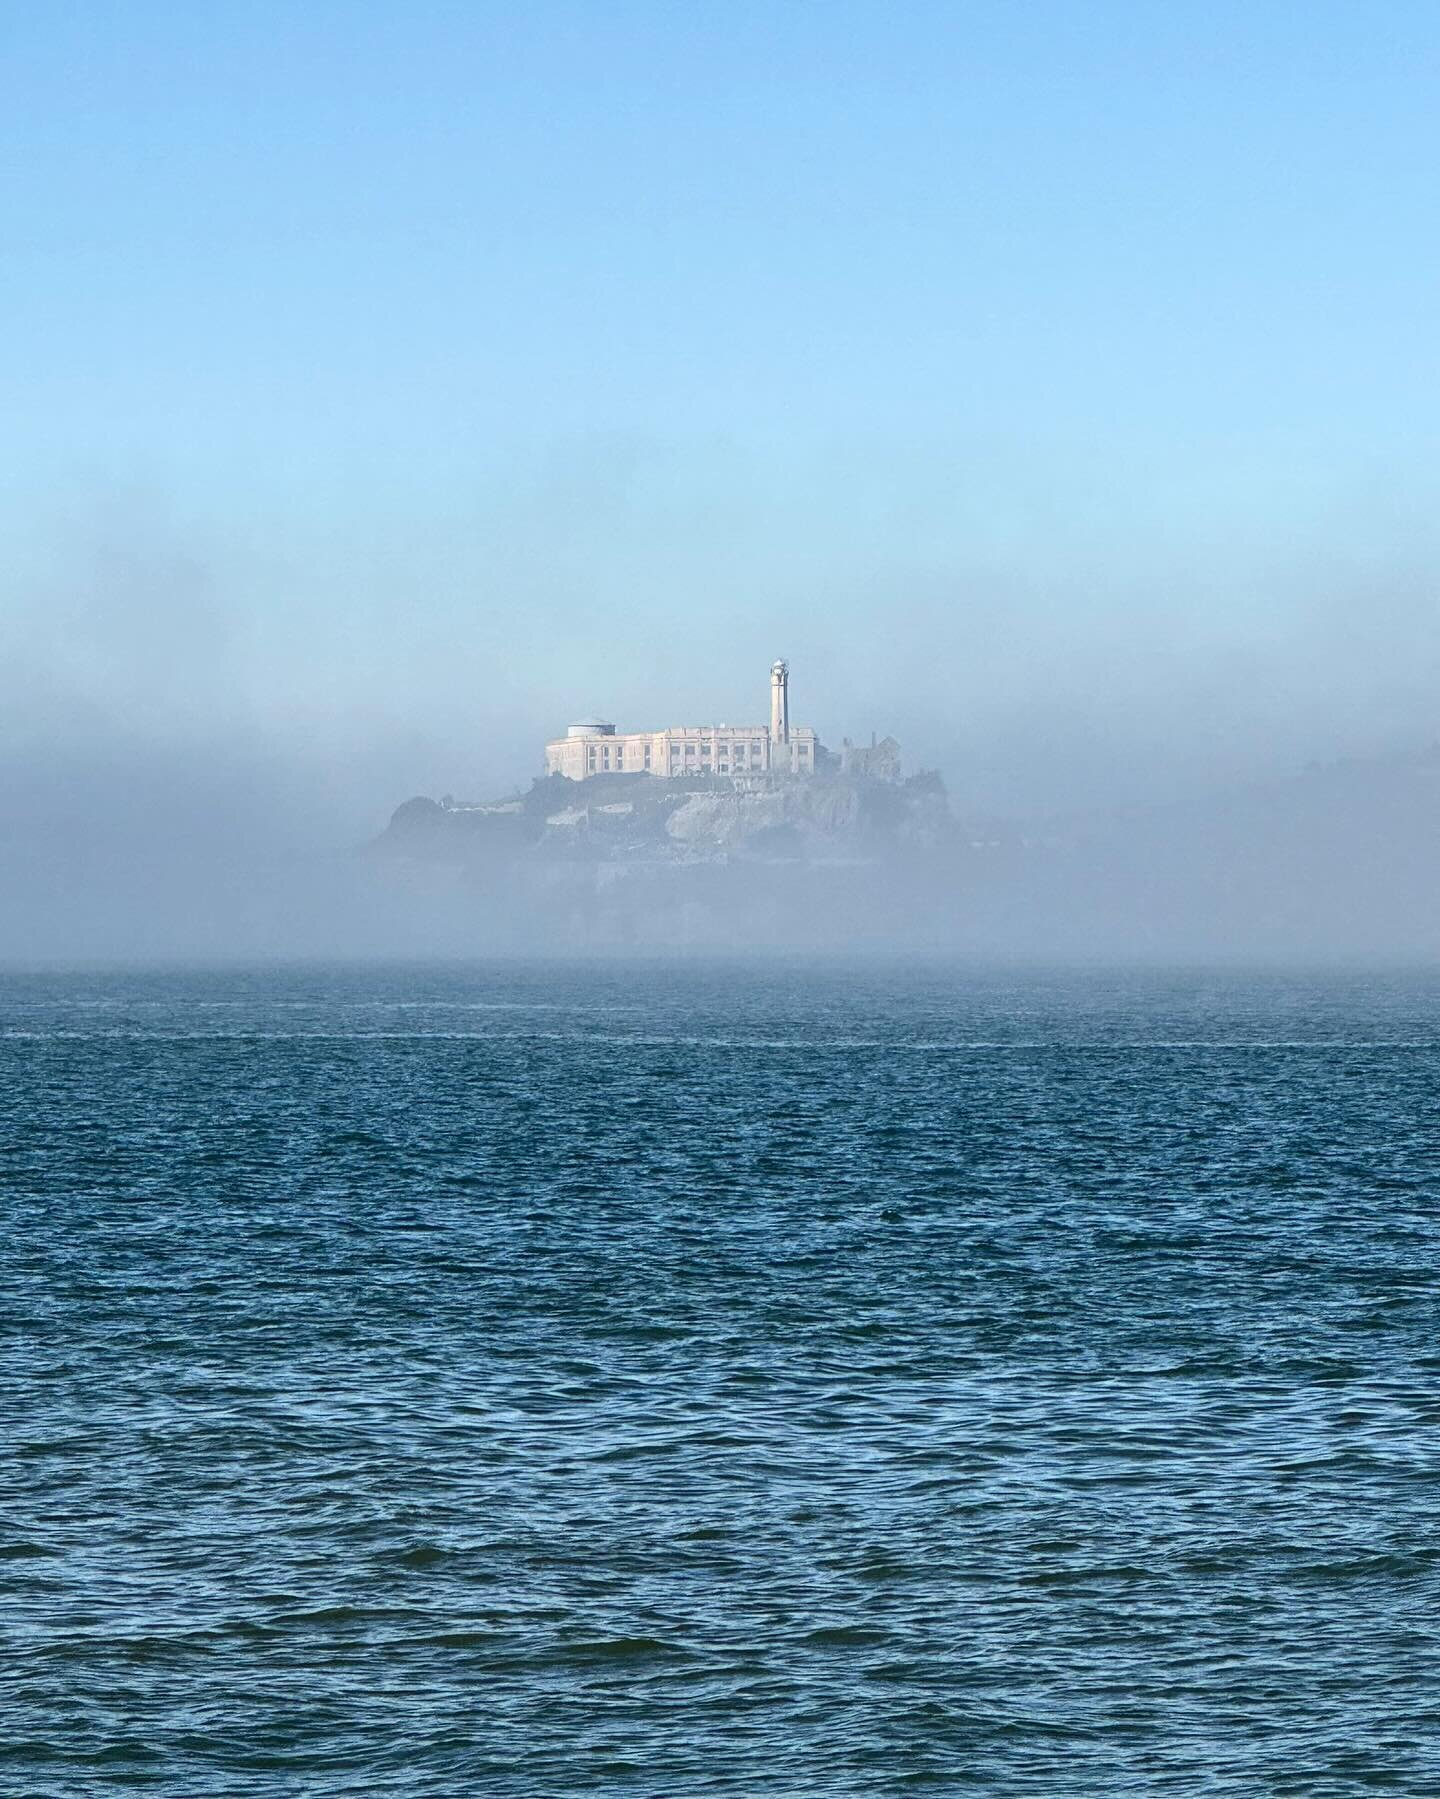 Alcatraz appears in the distance as the morning fog lifts off the San Francisco Bay
.
.
.
#alcatraz #sanfrancisco #bayarea #travel #fog #california #bayareaphotographer #welltraveled #karlthefog #afarmag